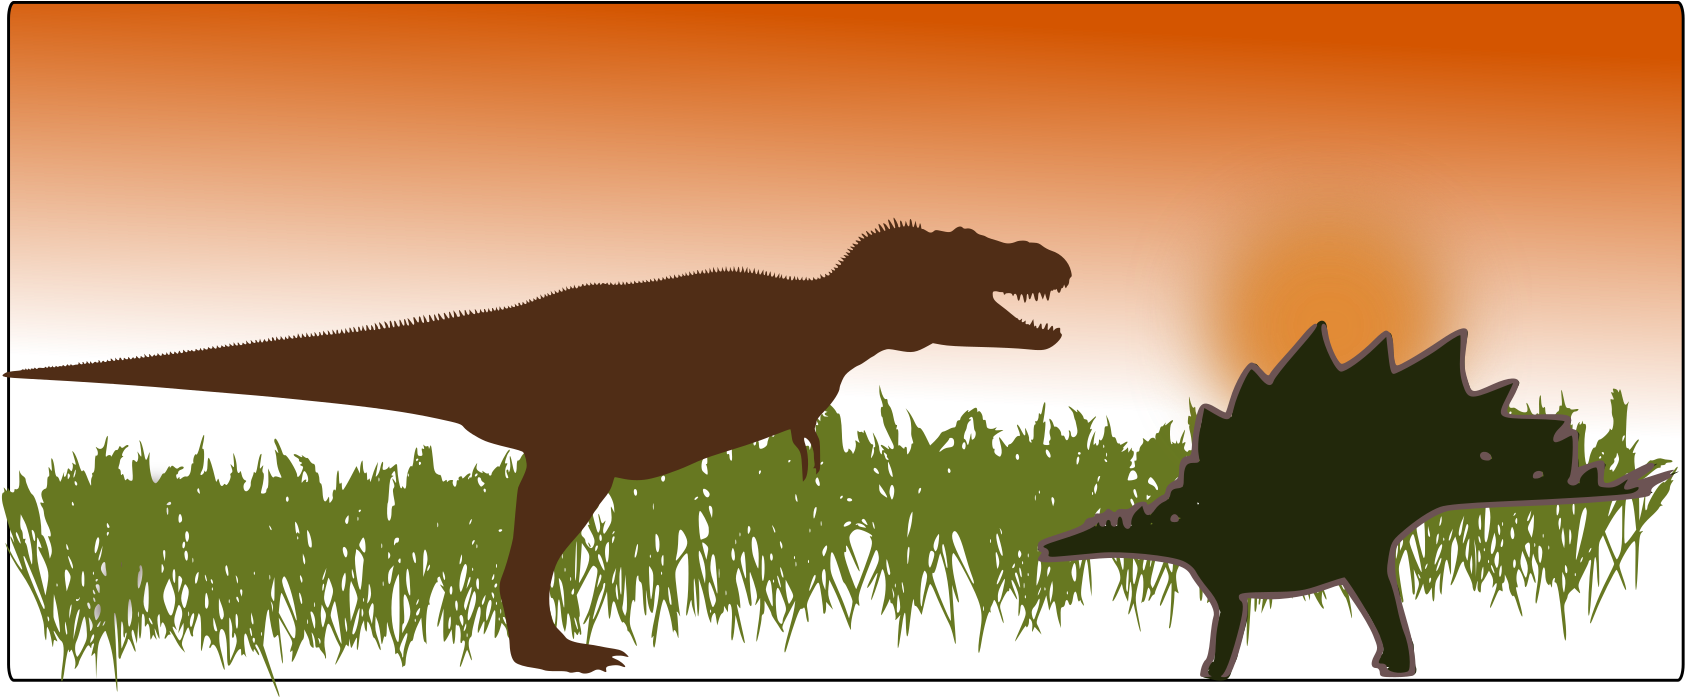 A Dinosaur Standing In Grass